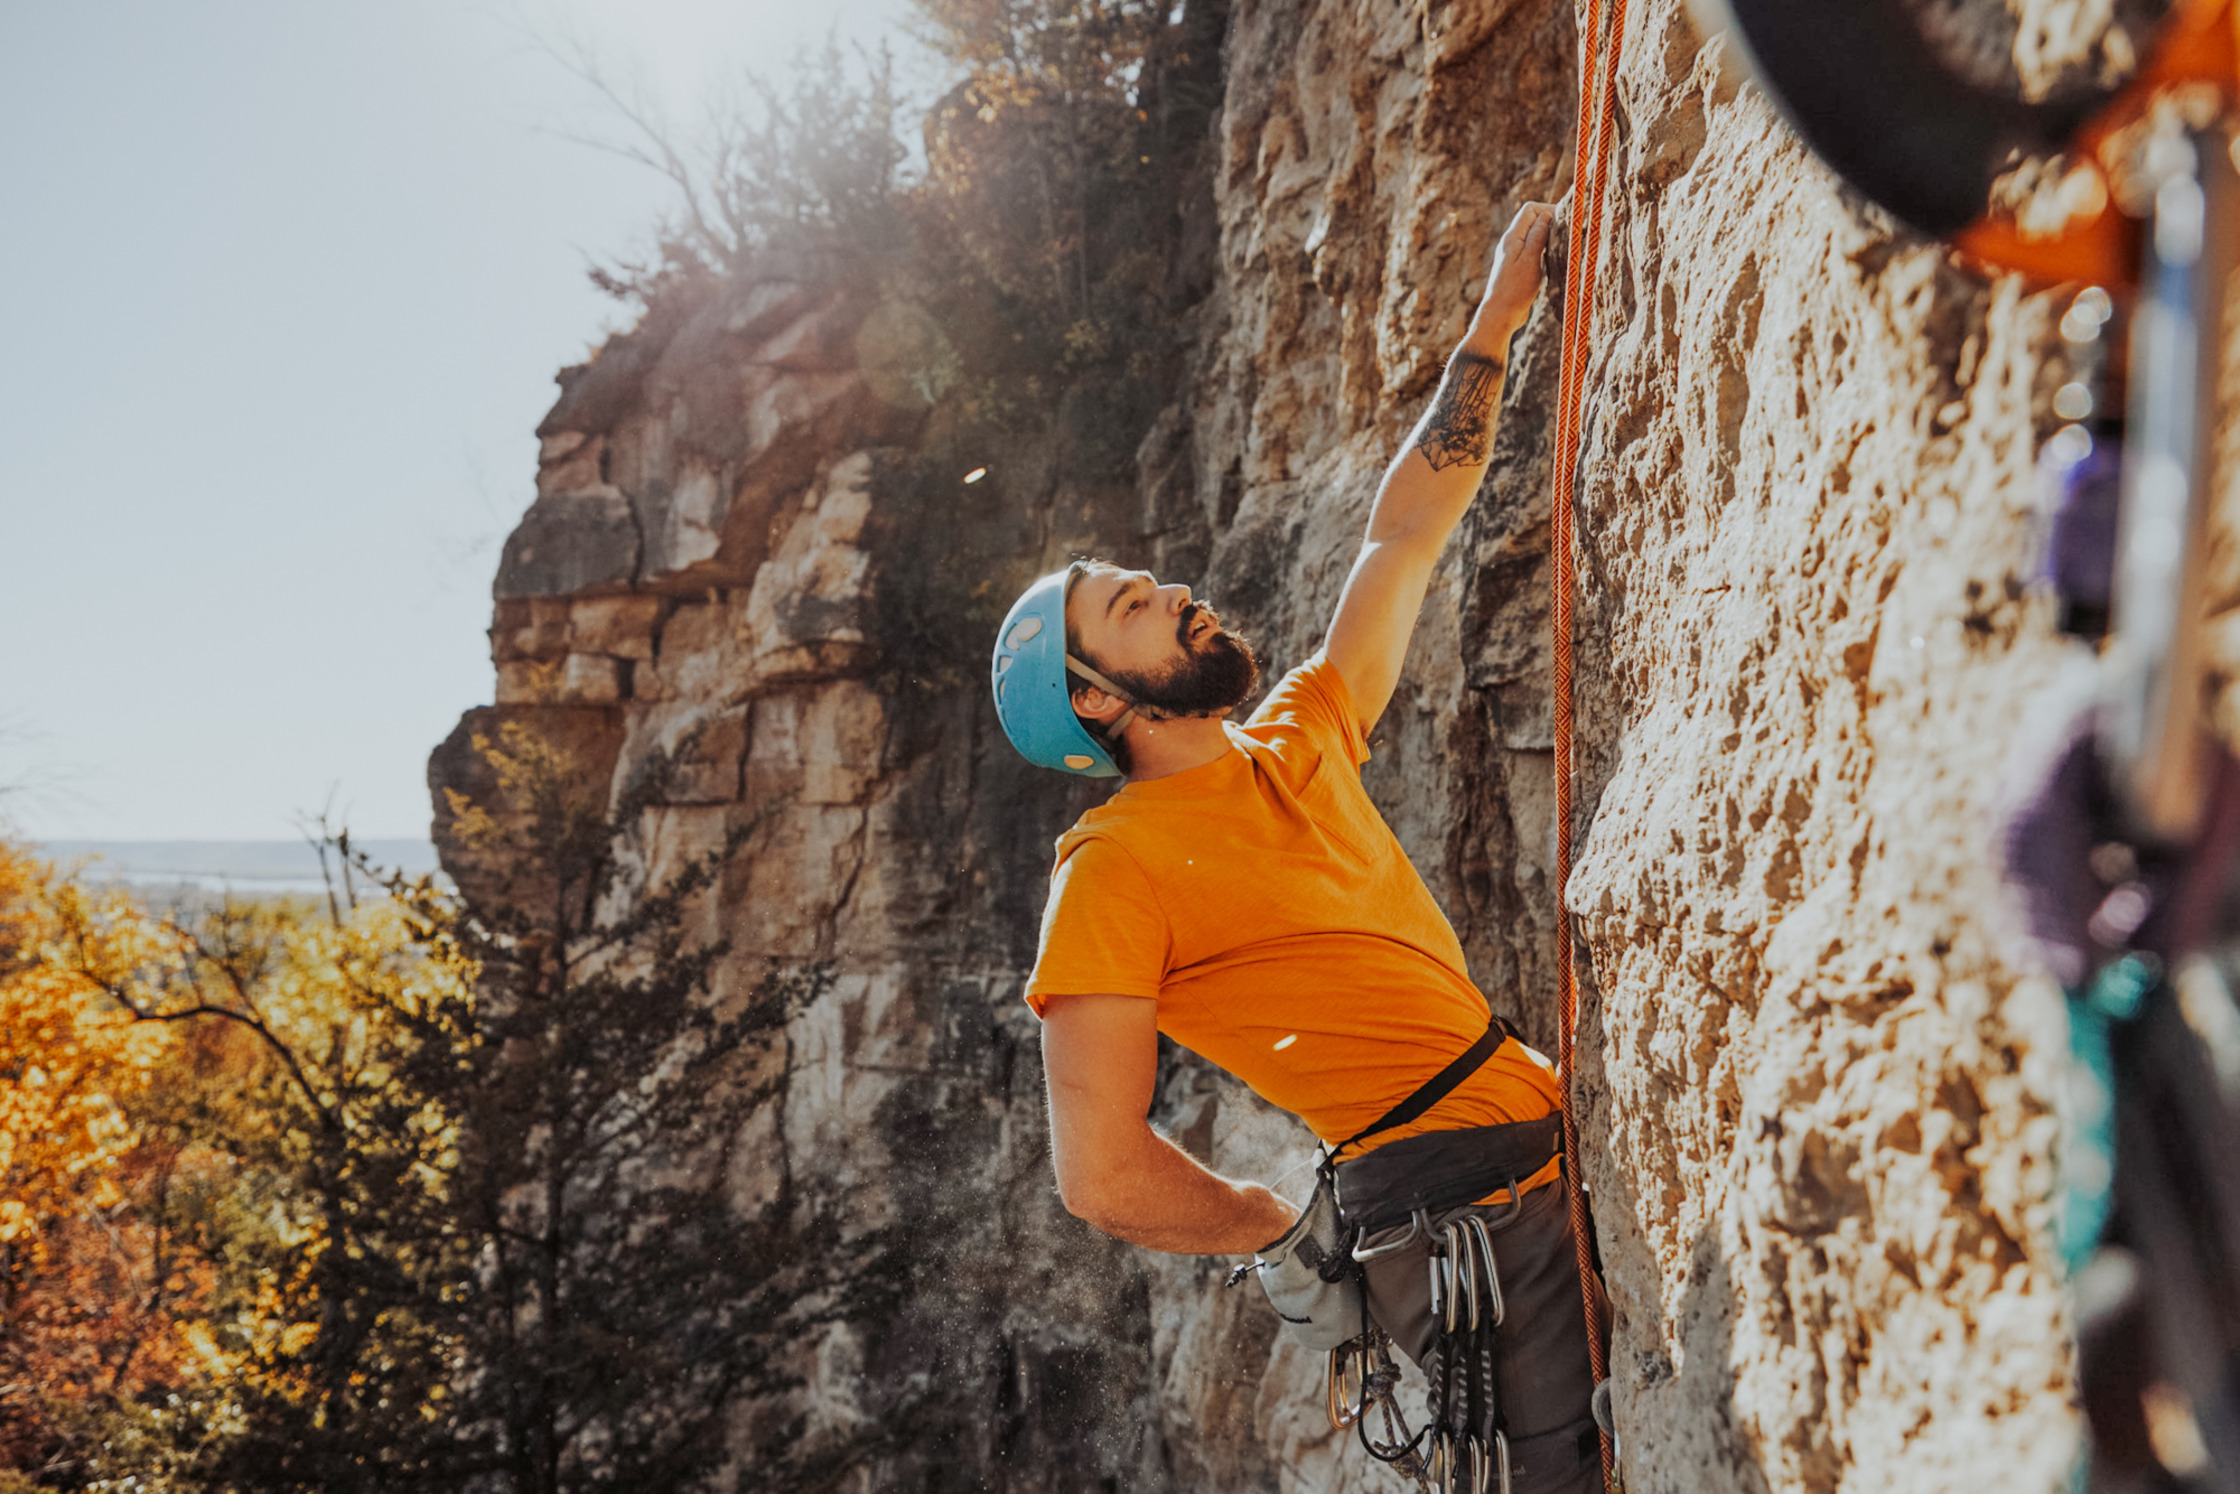 a man in an orange shirt is climbing a rock wall